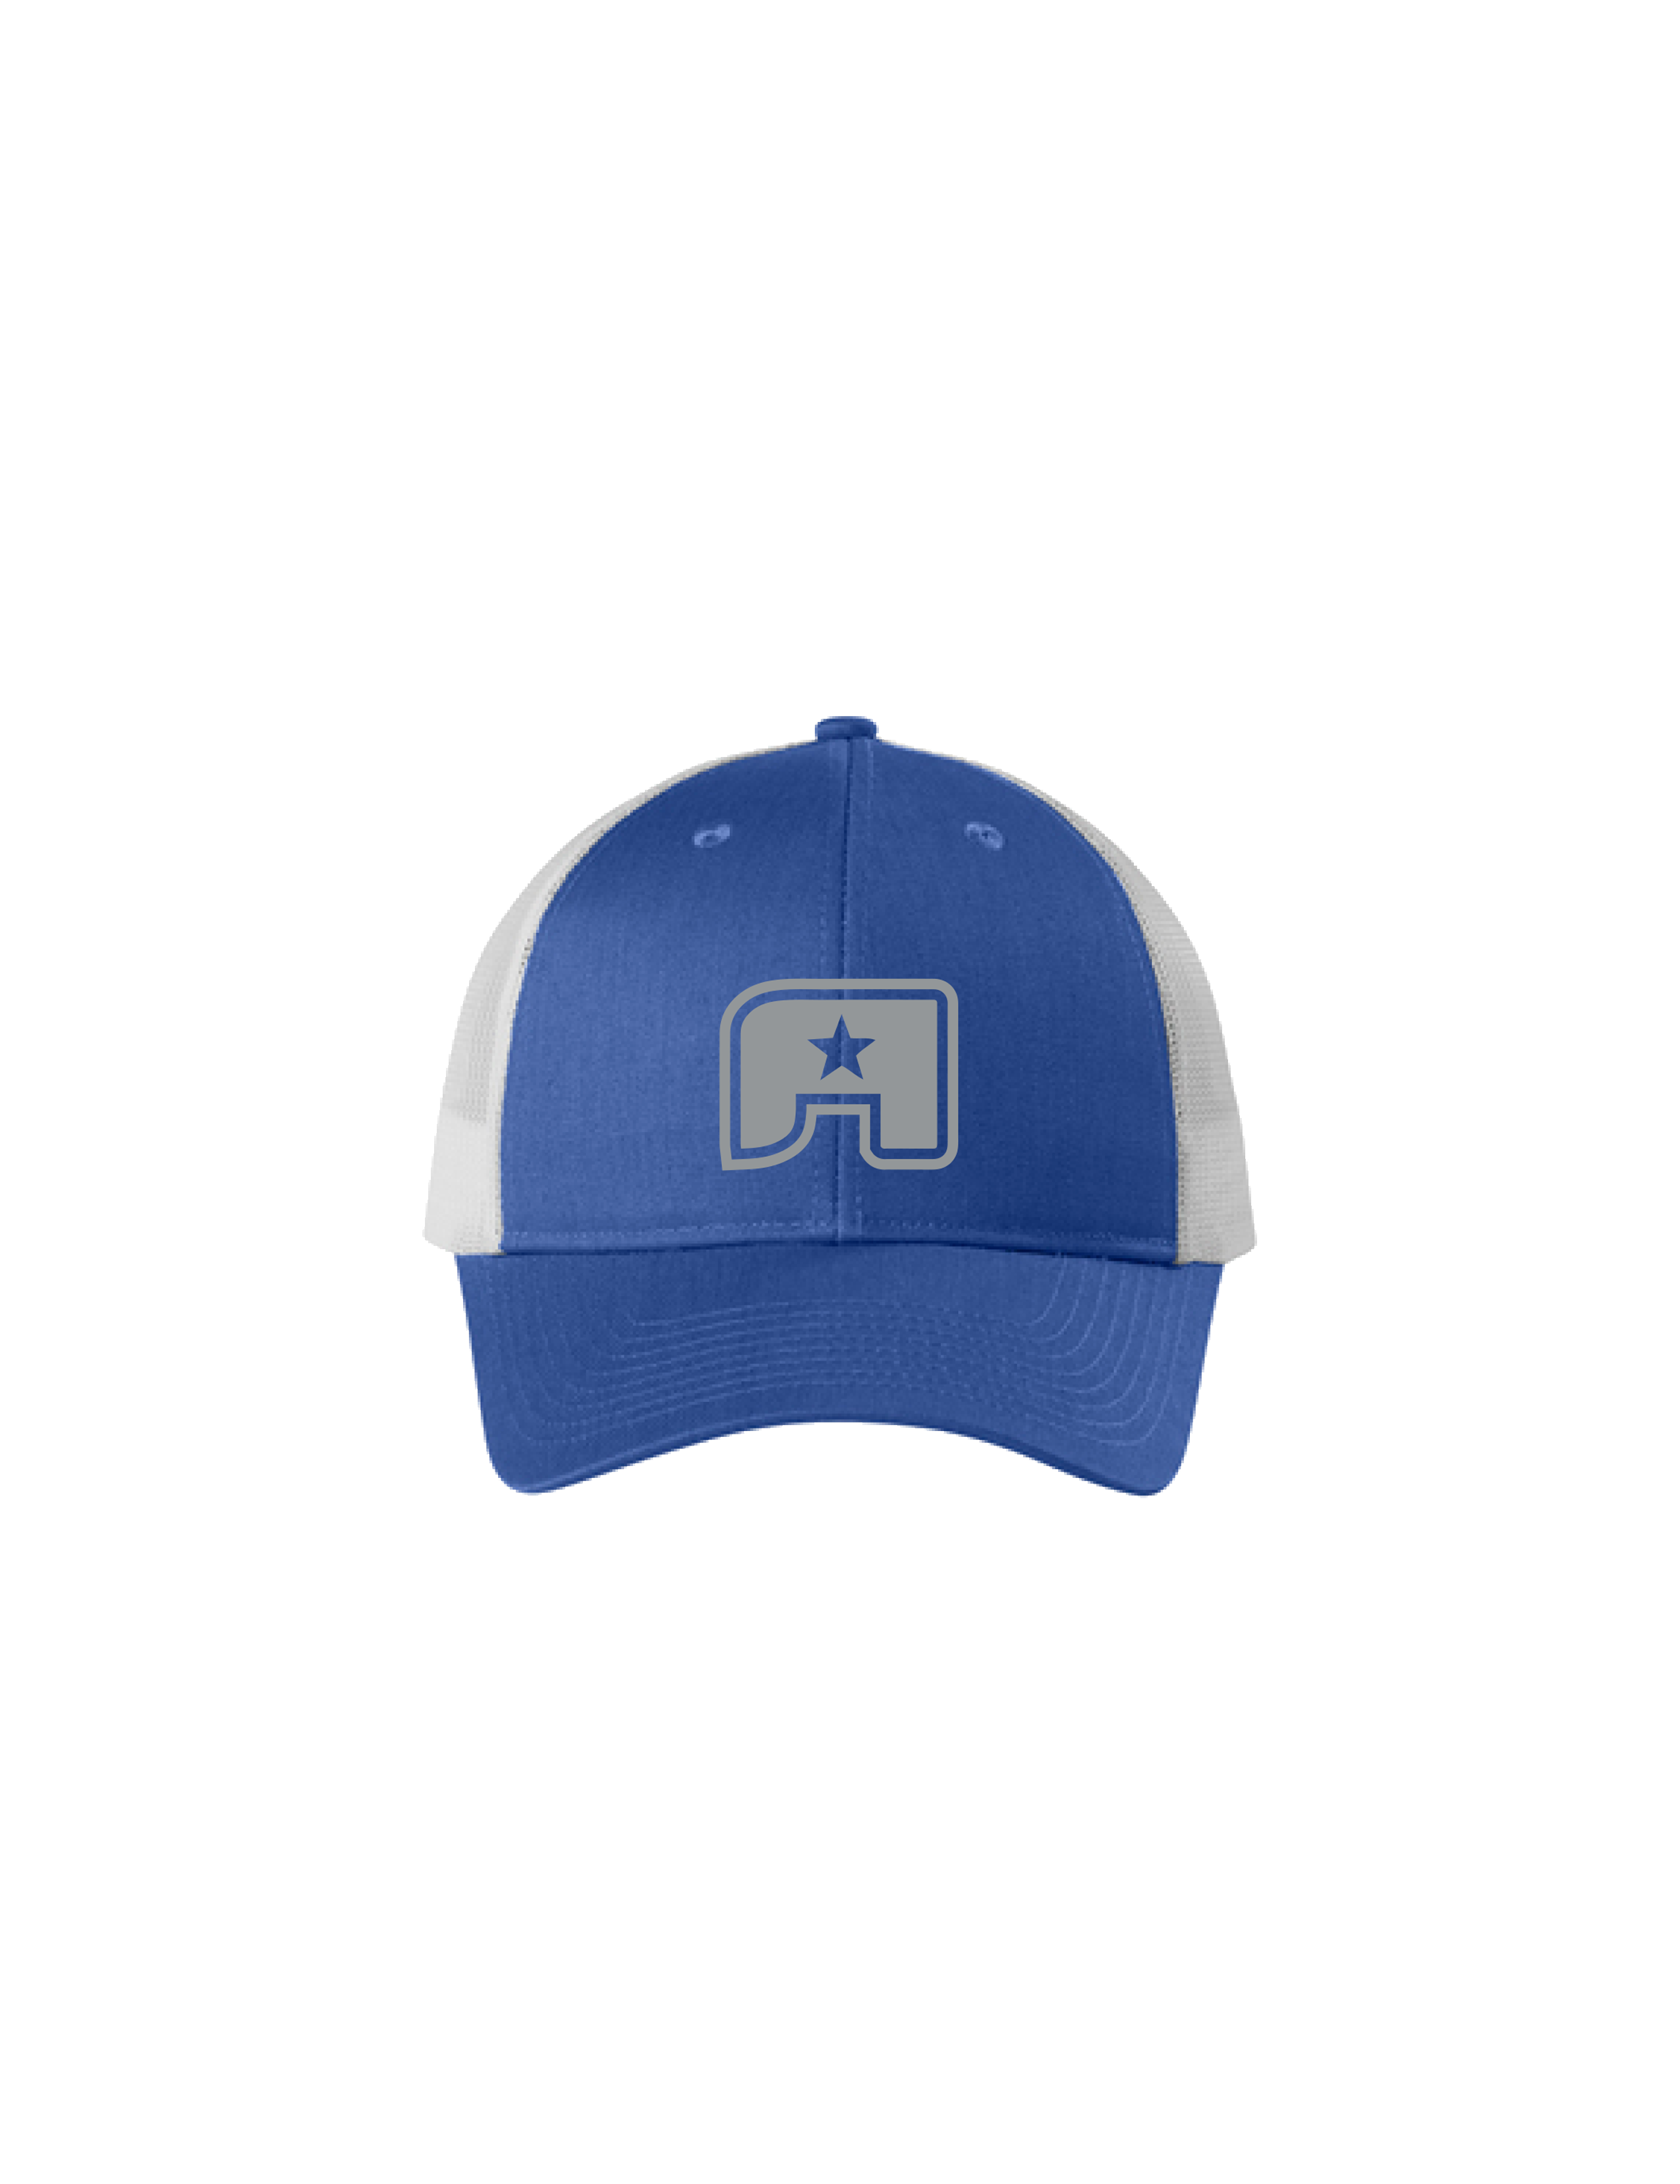 Atlanta Sport & Social Club Trucker - Blue/Grey